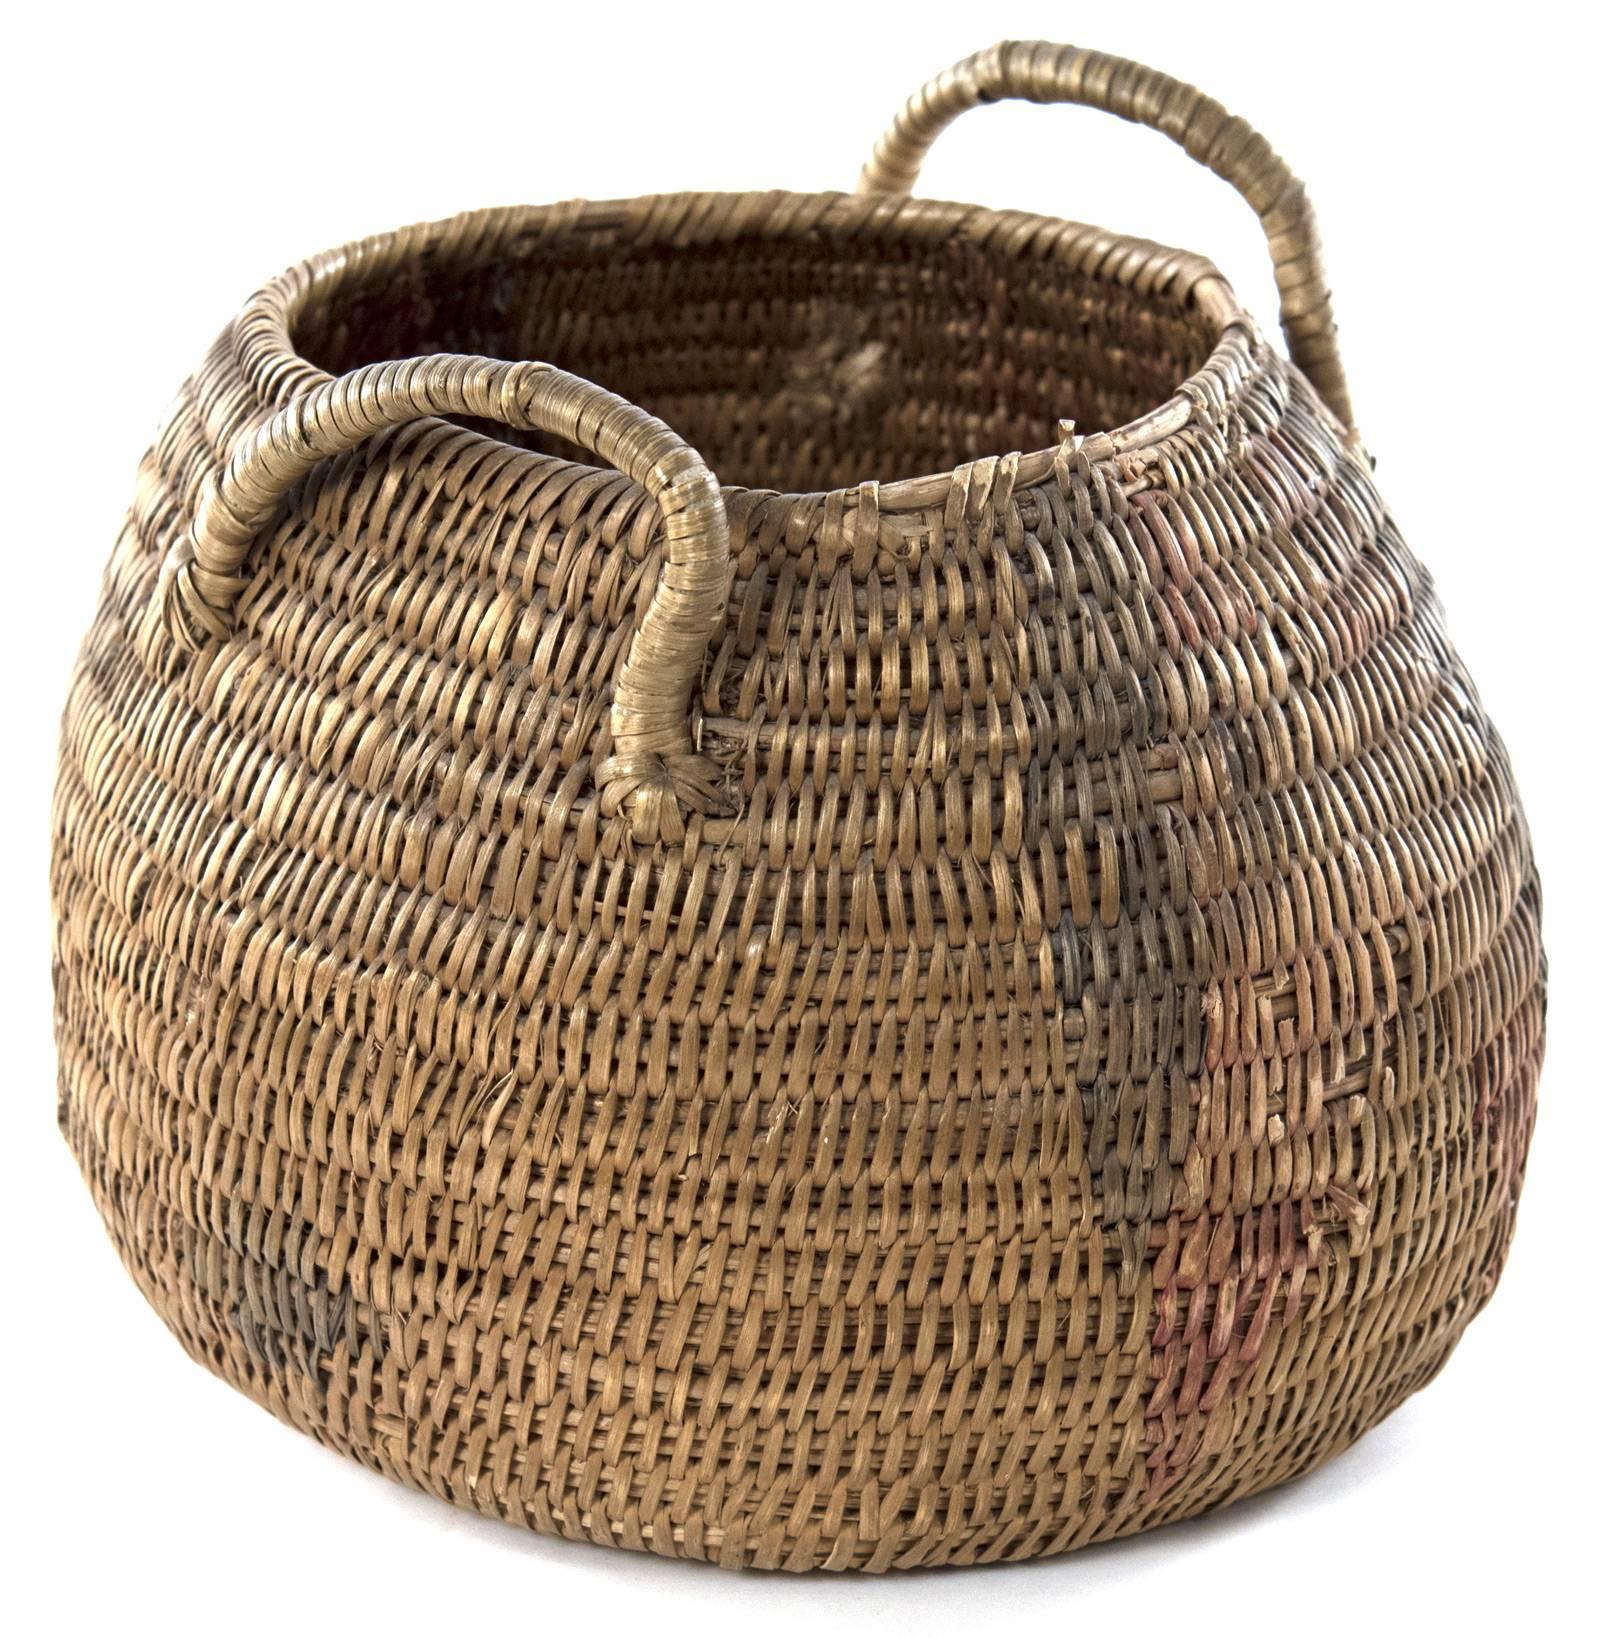 Woven Twined Native American Handled Basket